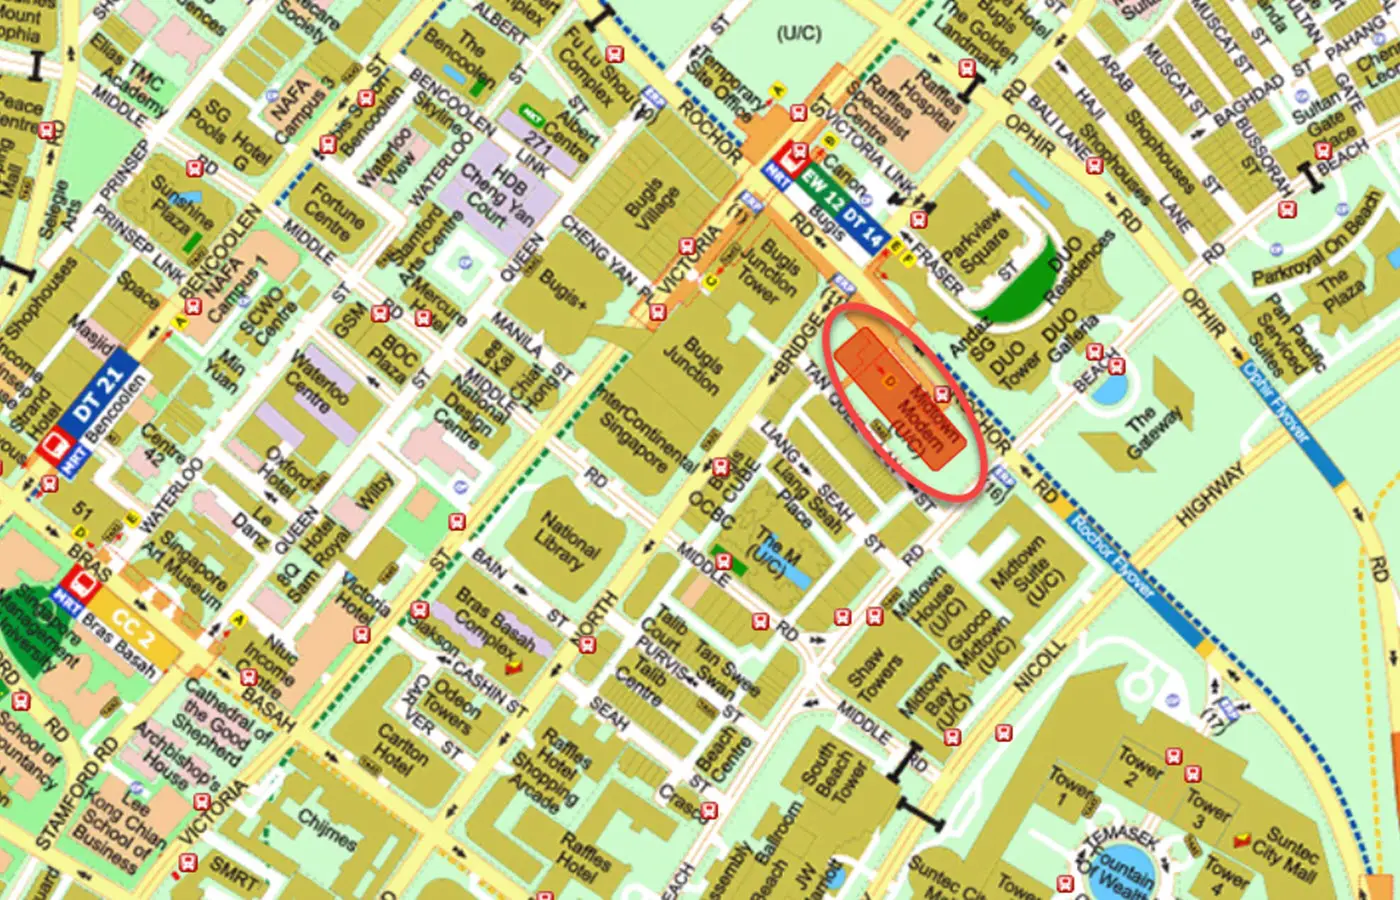 Midtown Modern Condo Location - Street Directory Map